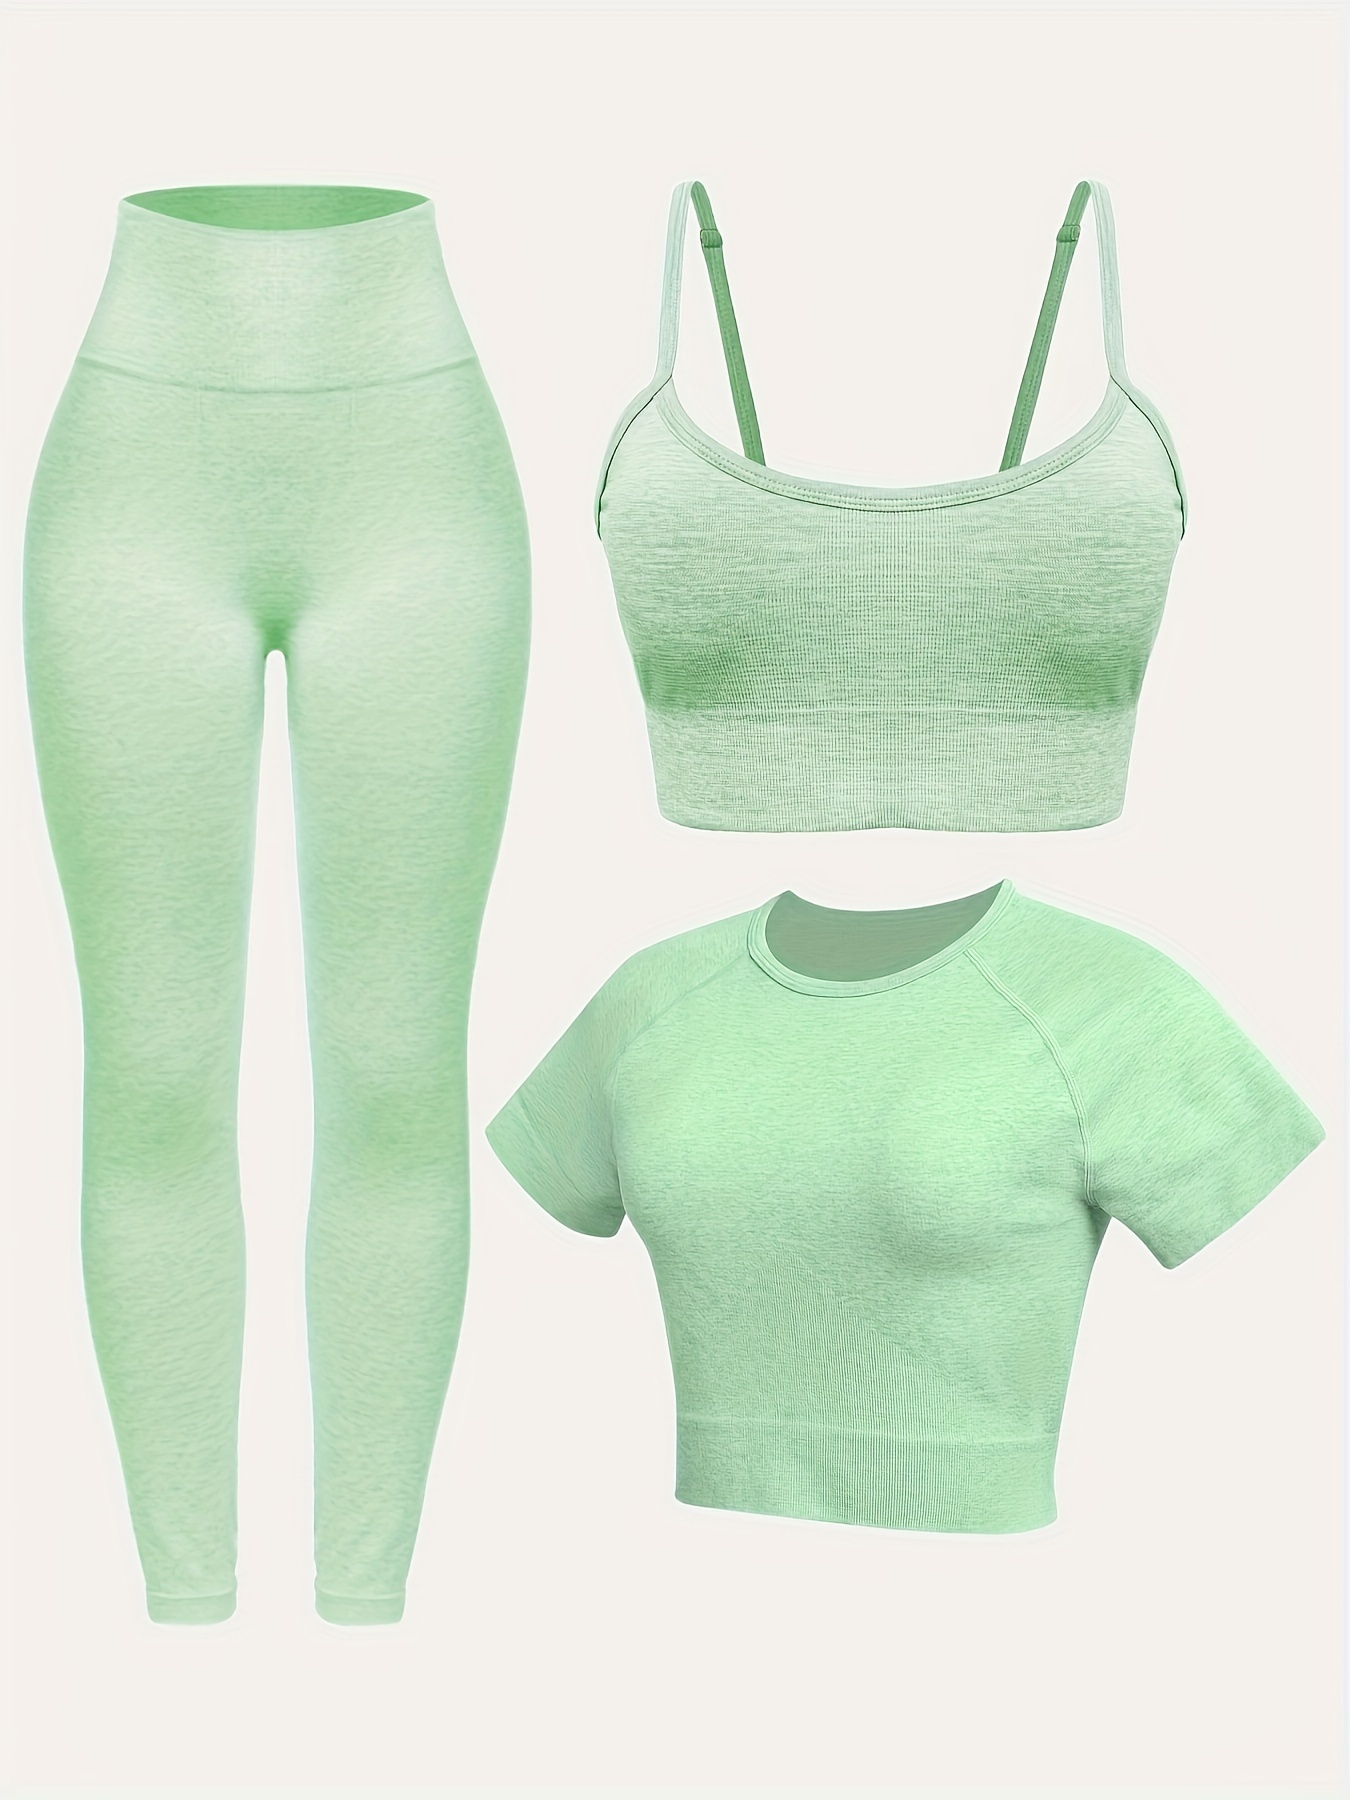 Zimi Workout Outfits for Women 2 Piece Seamless Rib-knit Sports Bra High  Waist Yoga Leggings Sets Blue S